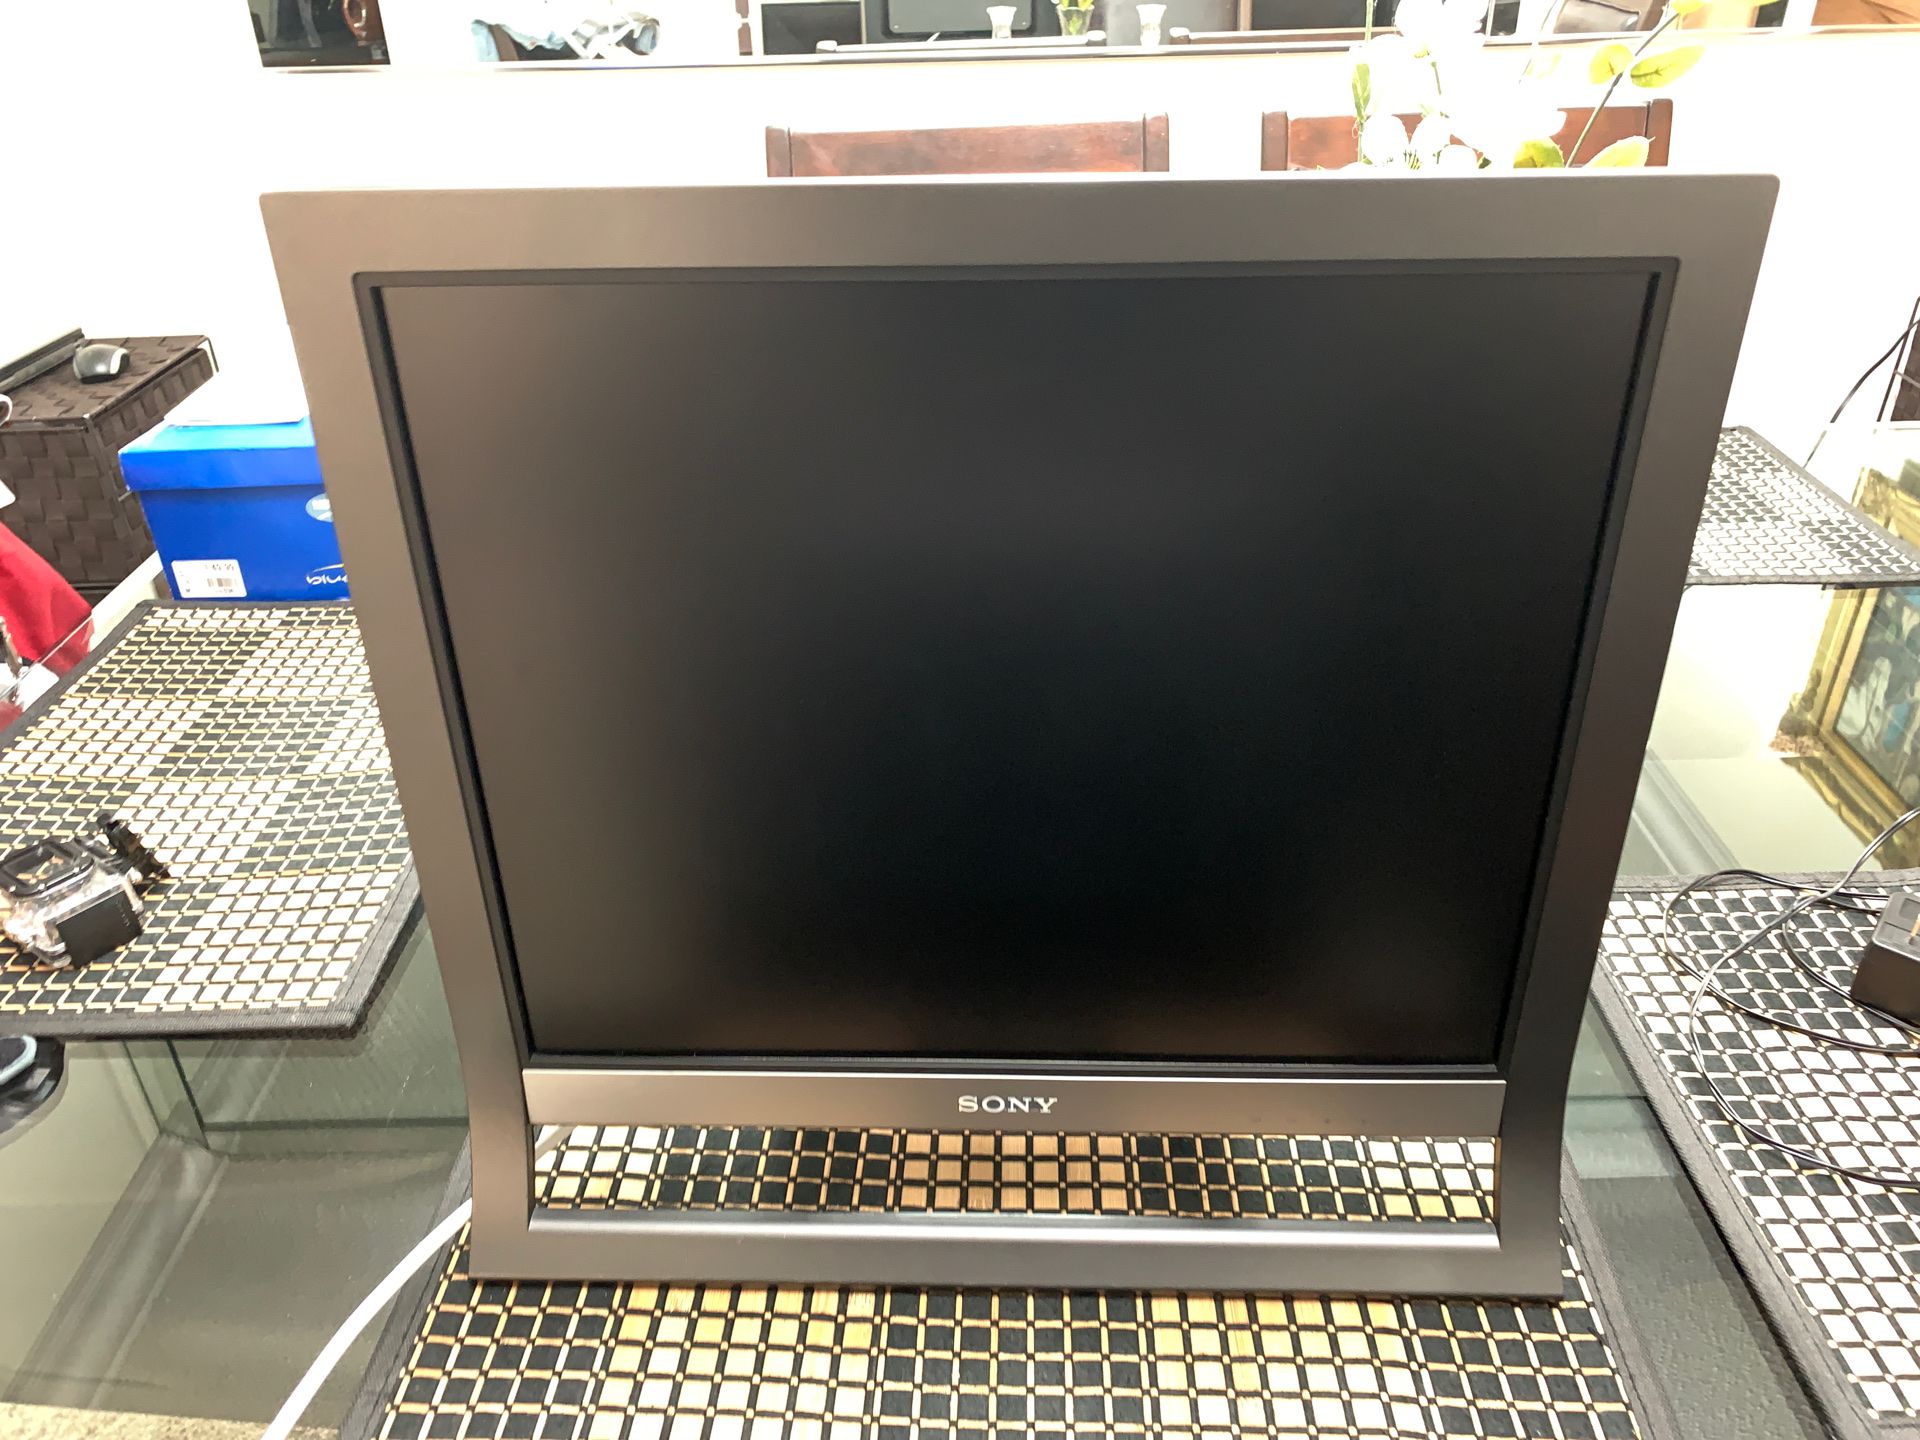 Sony Flat Screen Computer Monitor